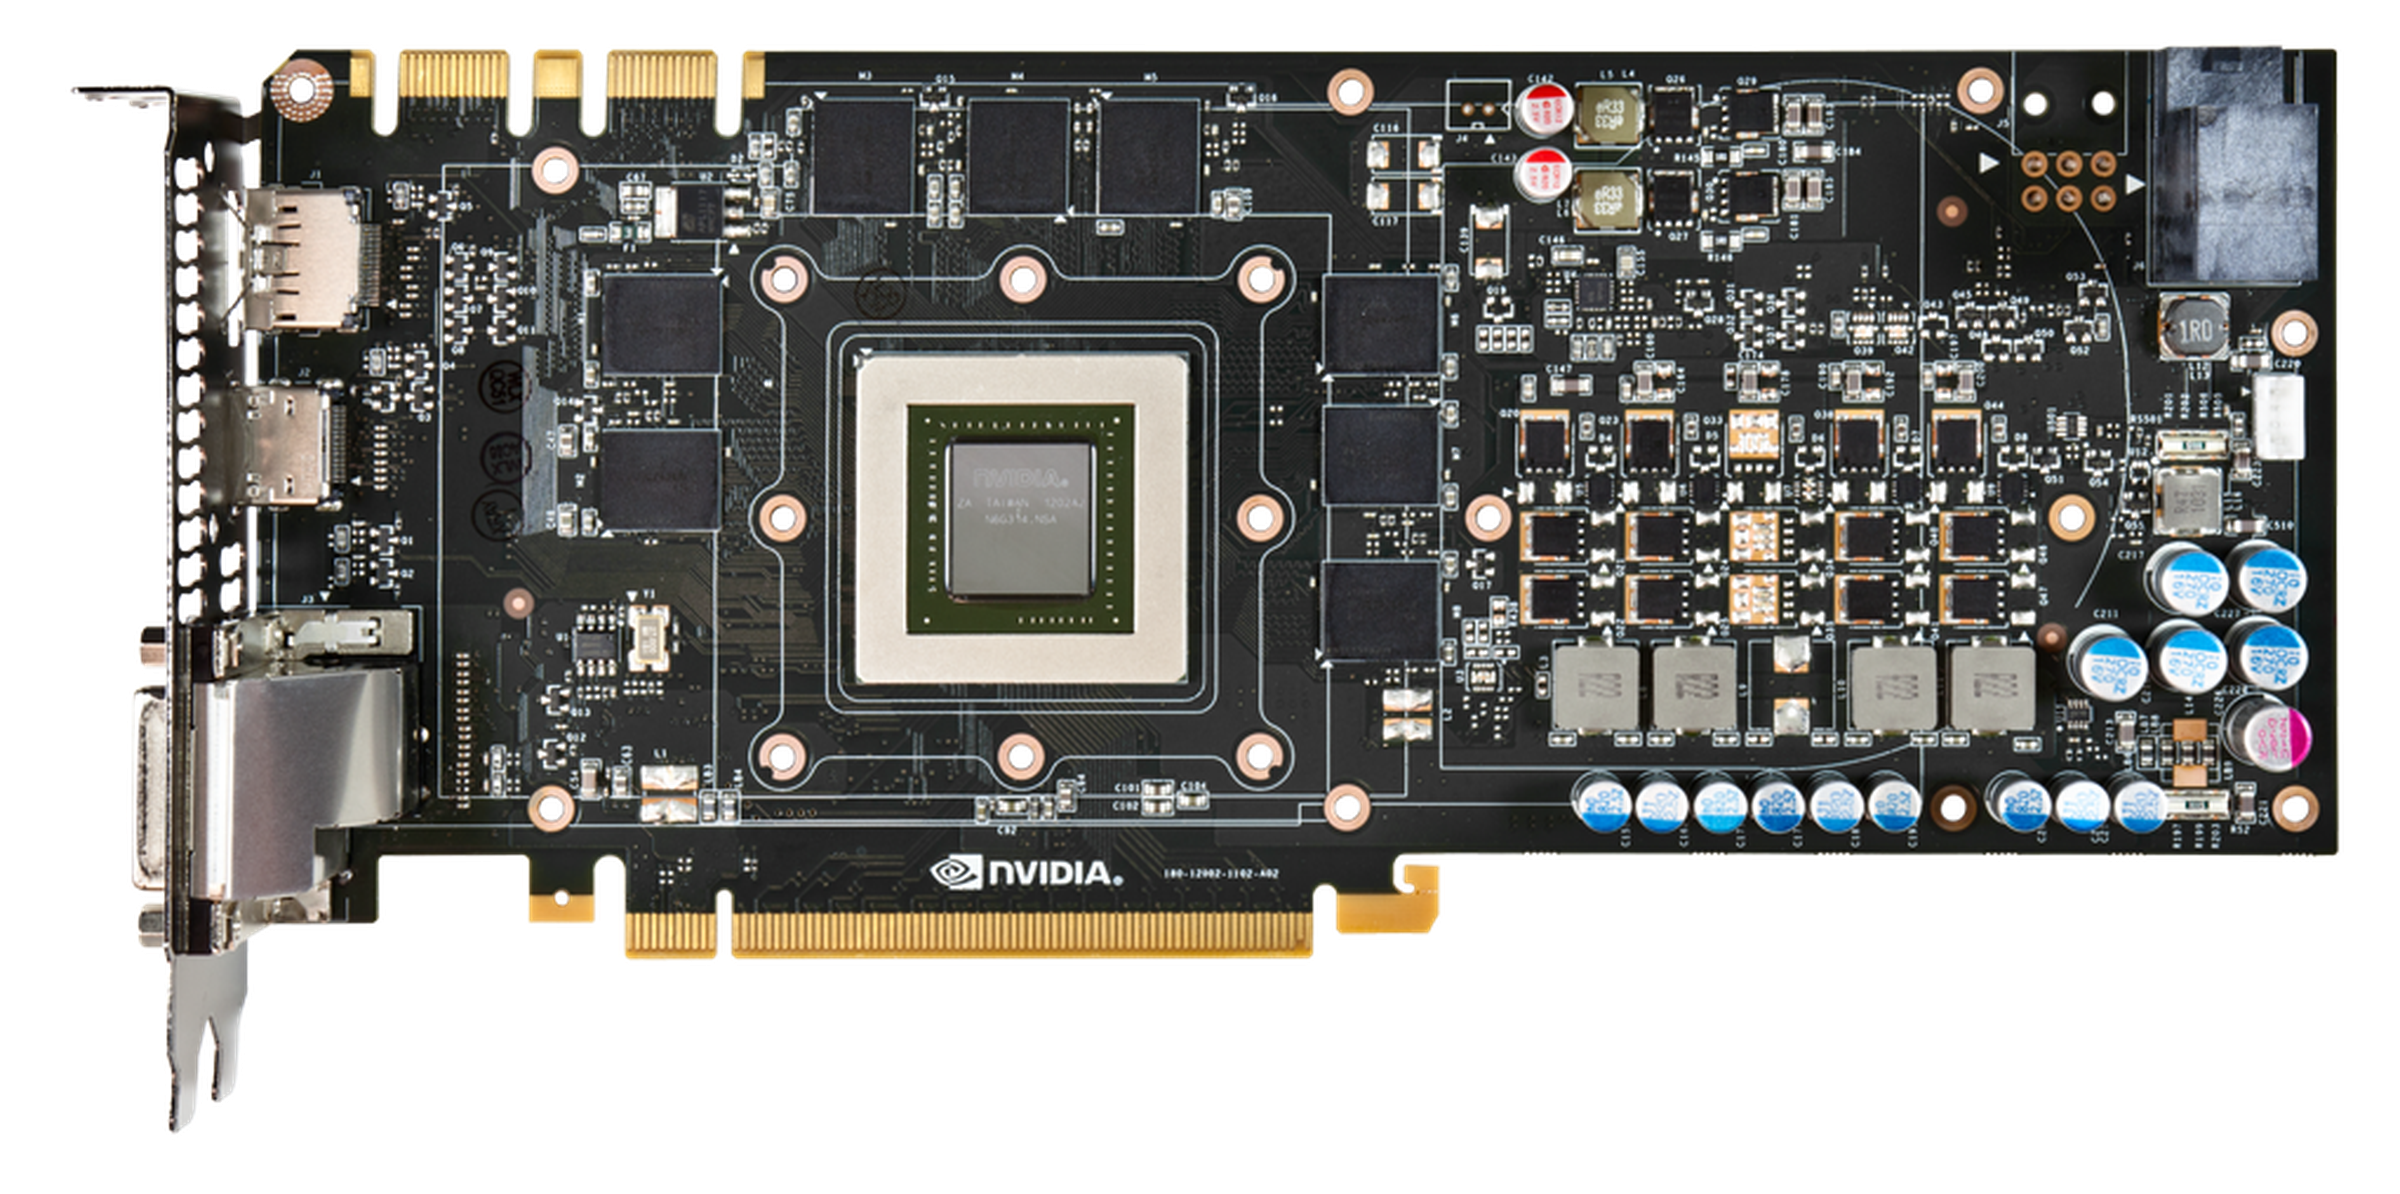 Nvidia GeForce GTX 680 official photos